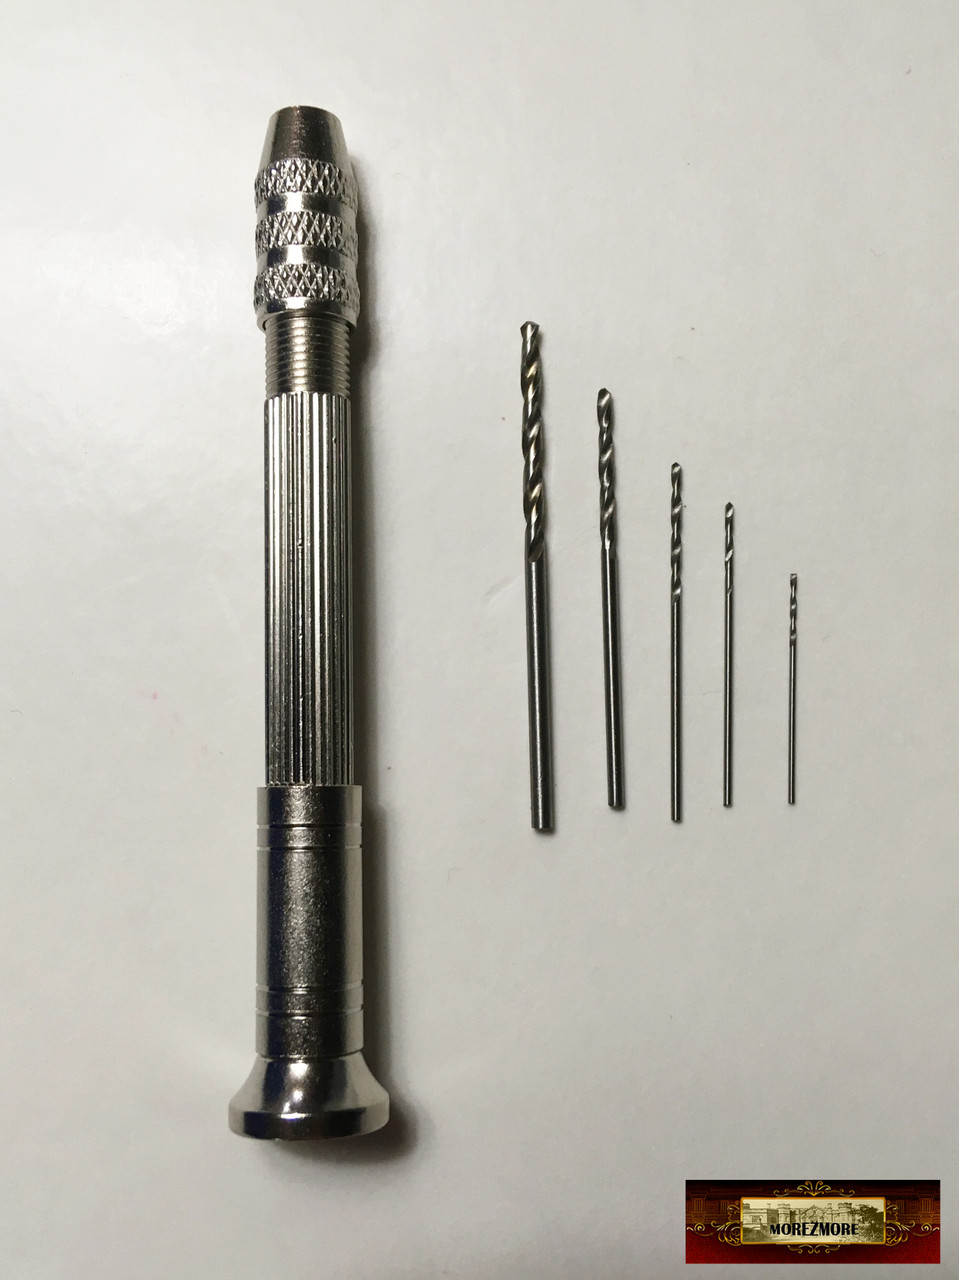 M01017 MOREZMORE Mini Hand Drill and 5 Drill Bits 0.6mm 0.8mm 1.0mm 1.5